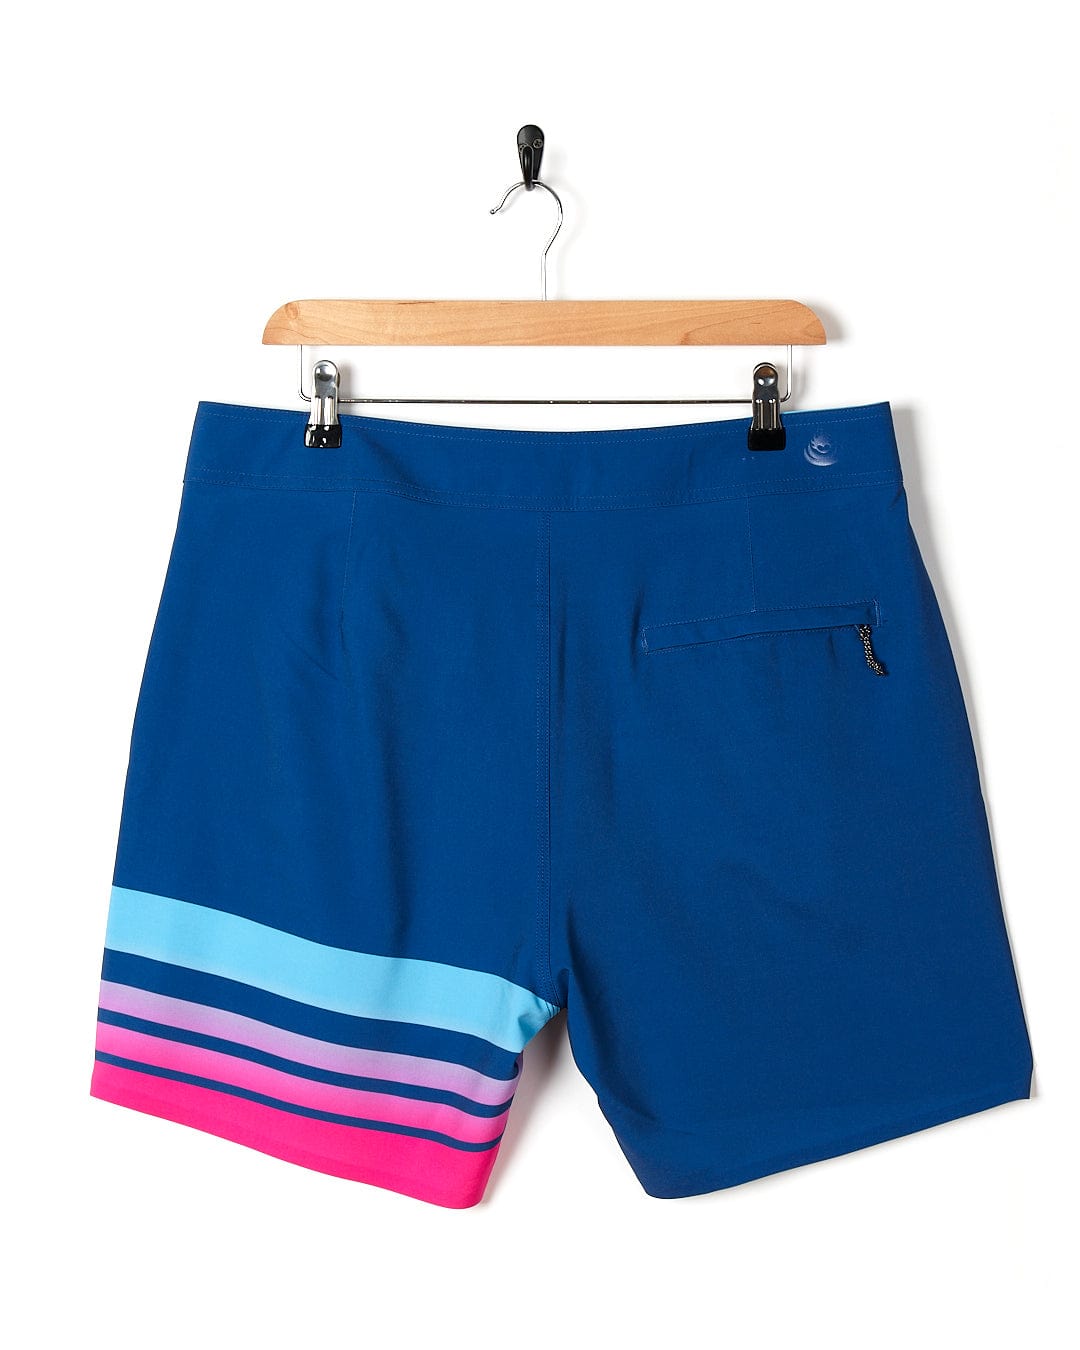 A Splash Gradient - Mens Boardshort - Dark Blue with striped stripes. Brand Name: Saltrock